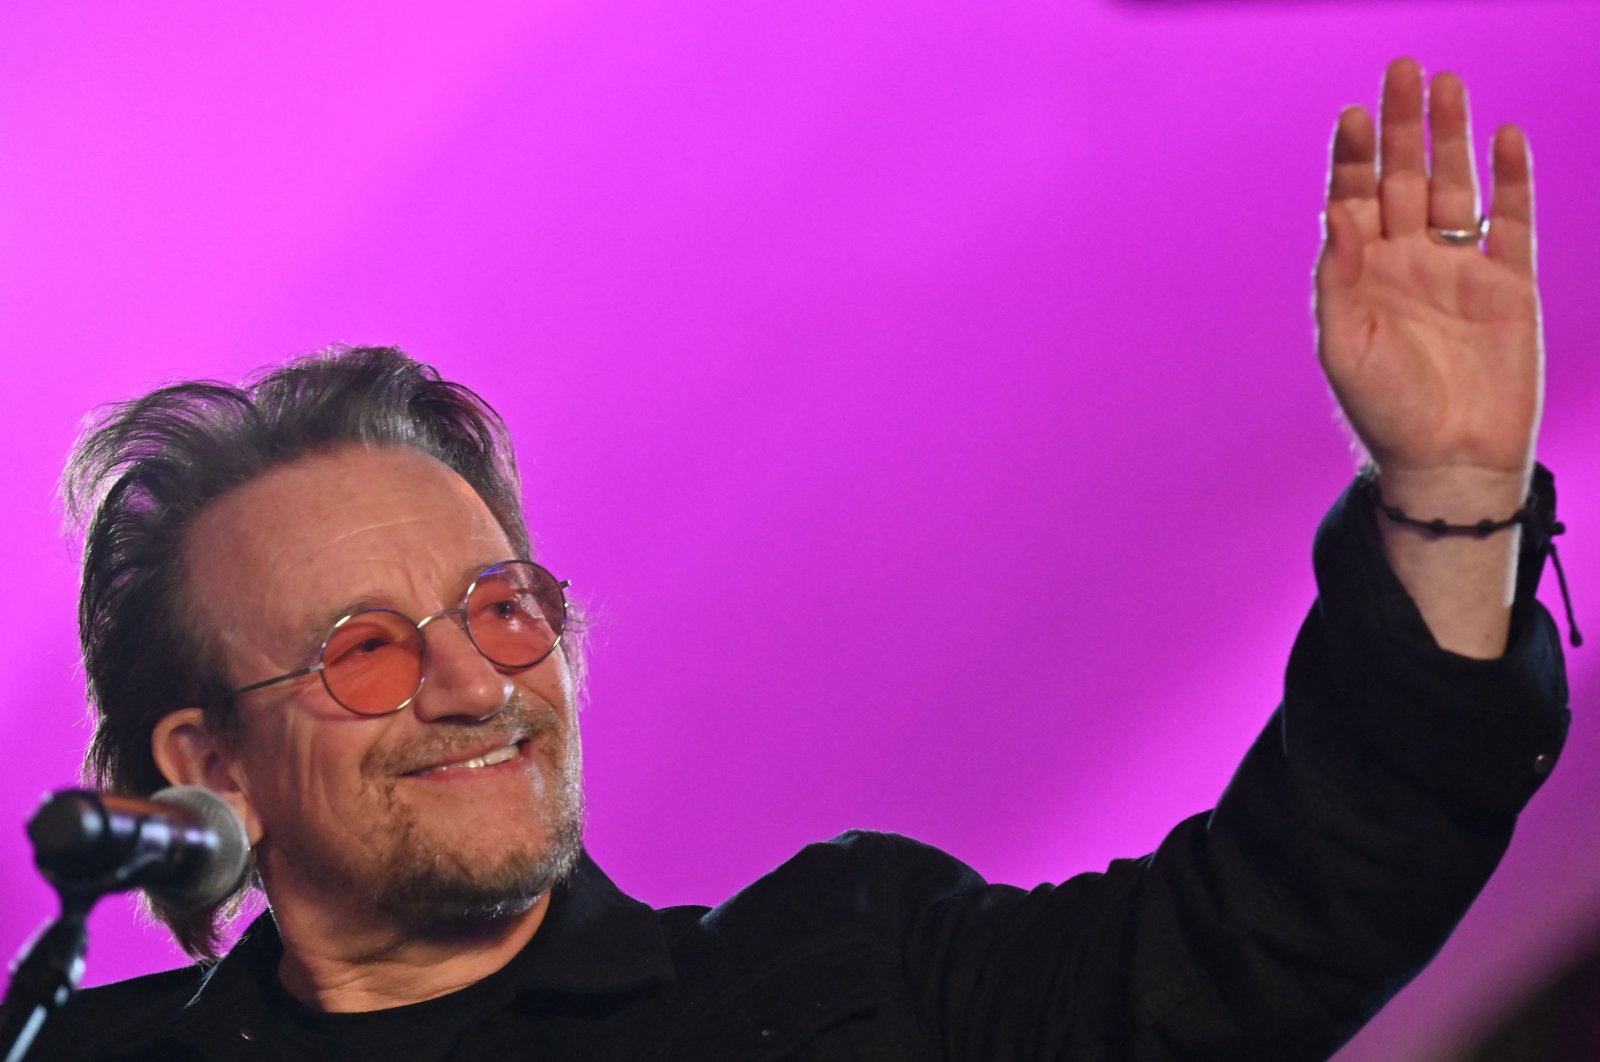 Memoar Bono ‘Menyerah’ mengungkap kehidupan pribadi pentolan U2